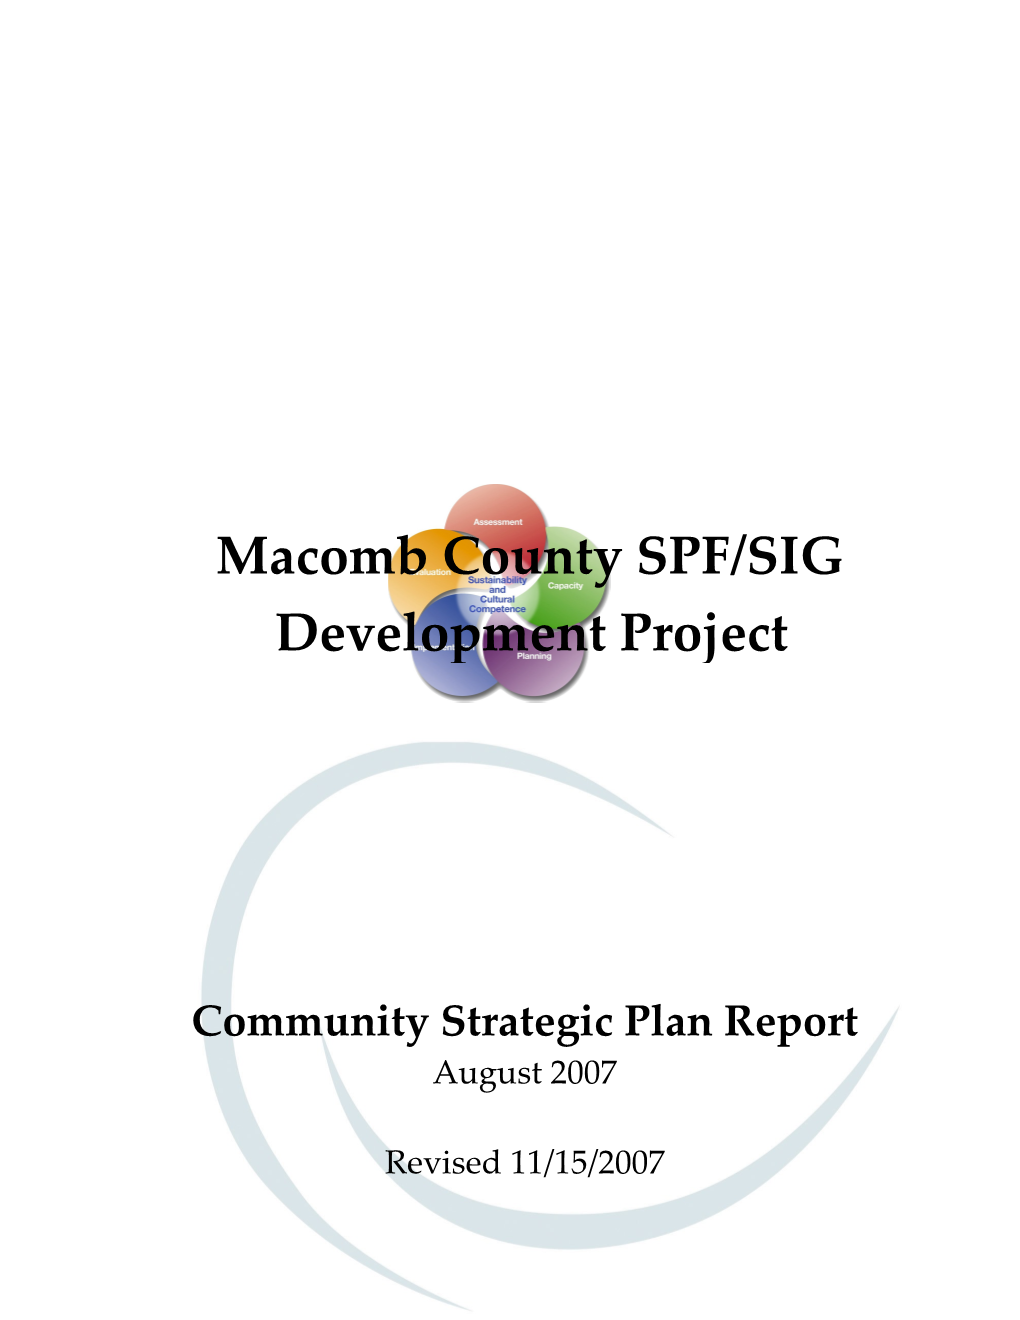 Macomb County Spf/Sig Development Project